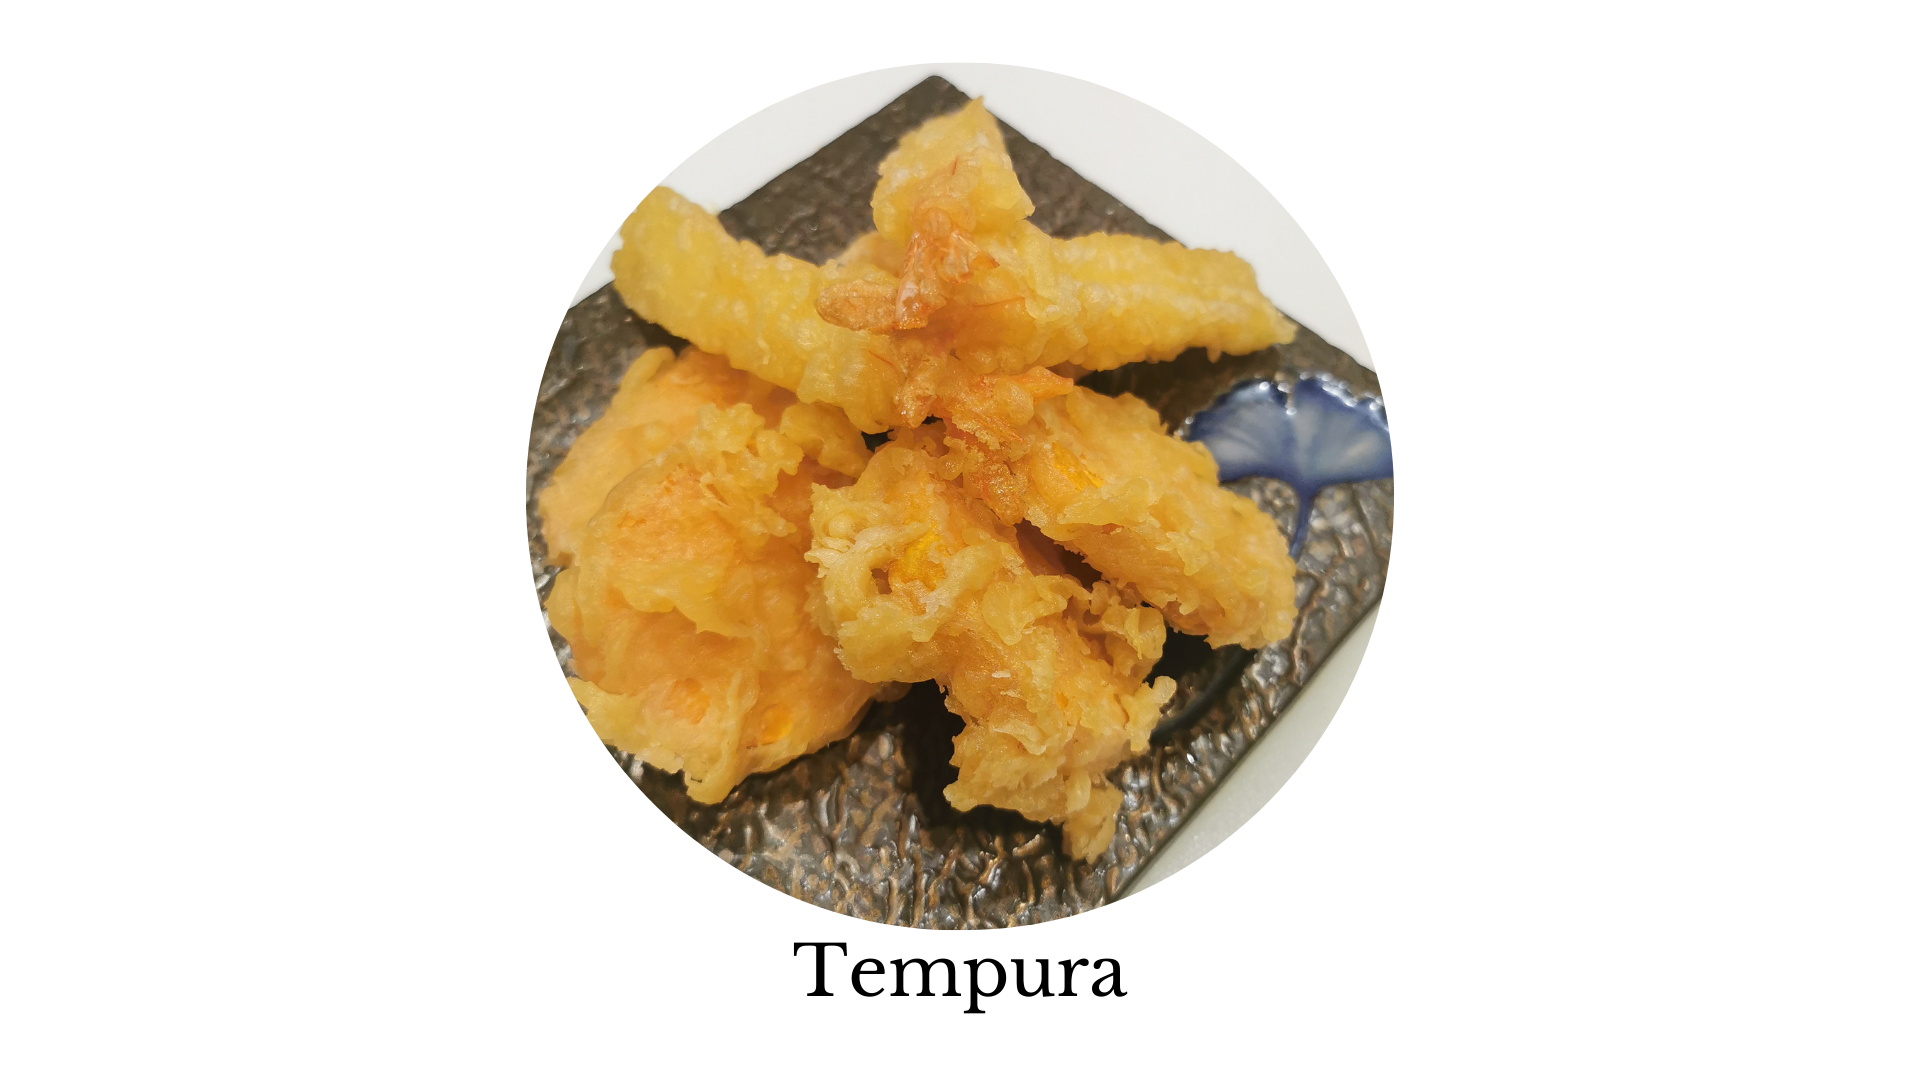 tempura, shrimp tempura, yam tempura, ebi, sushi, sashimi, sushi near me, sushi places near me, best sushi near me, sushi rice